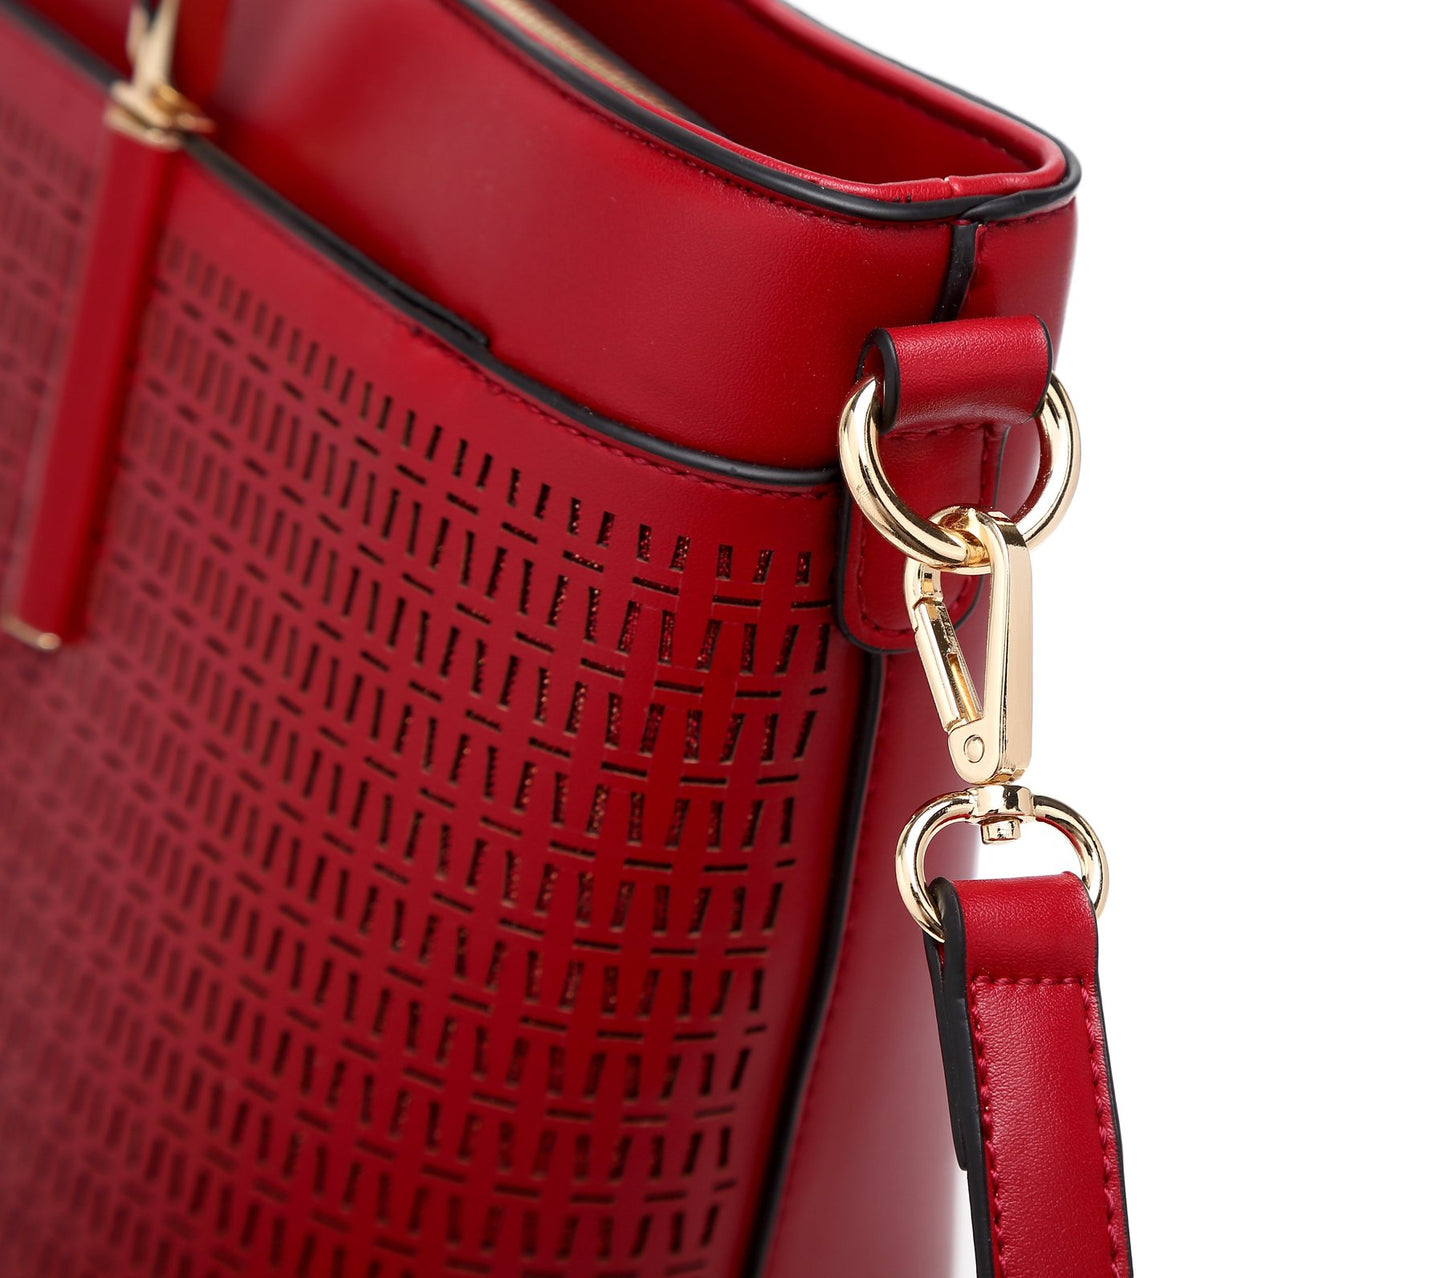 Sacred Love Crystal Large Tote Handbag Red